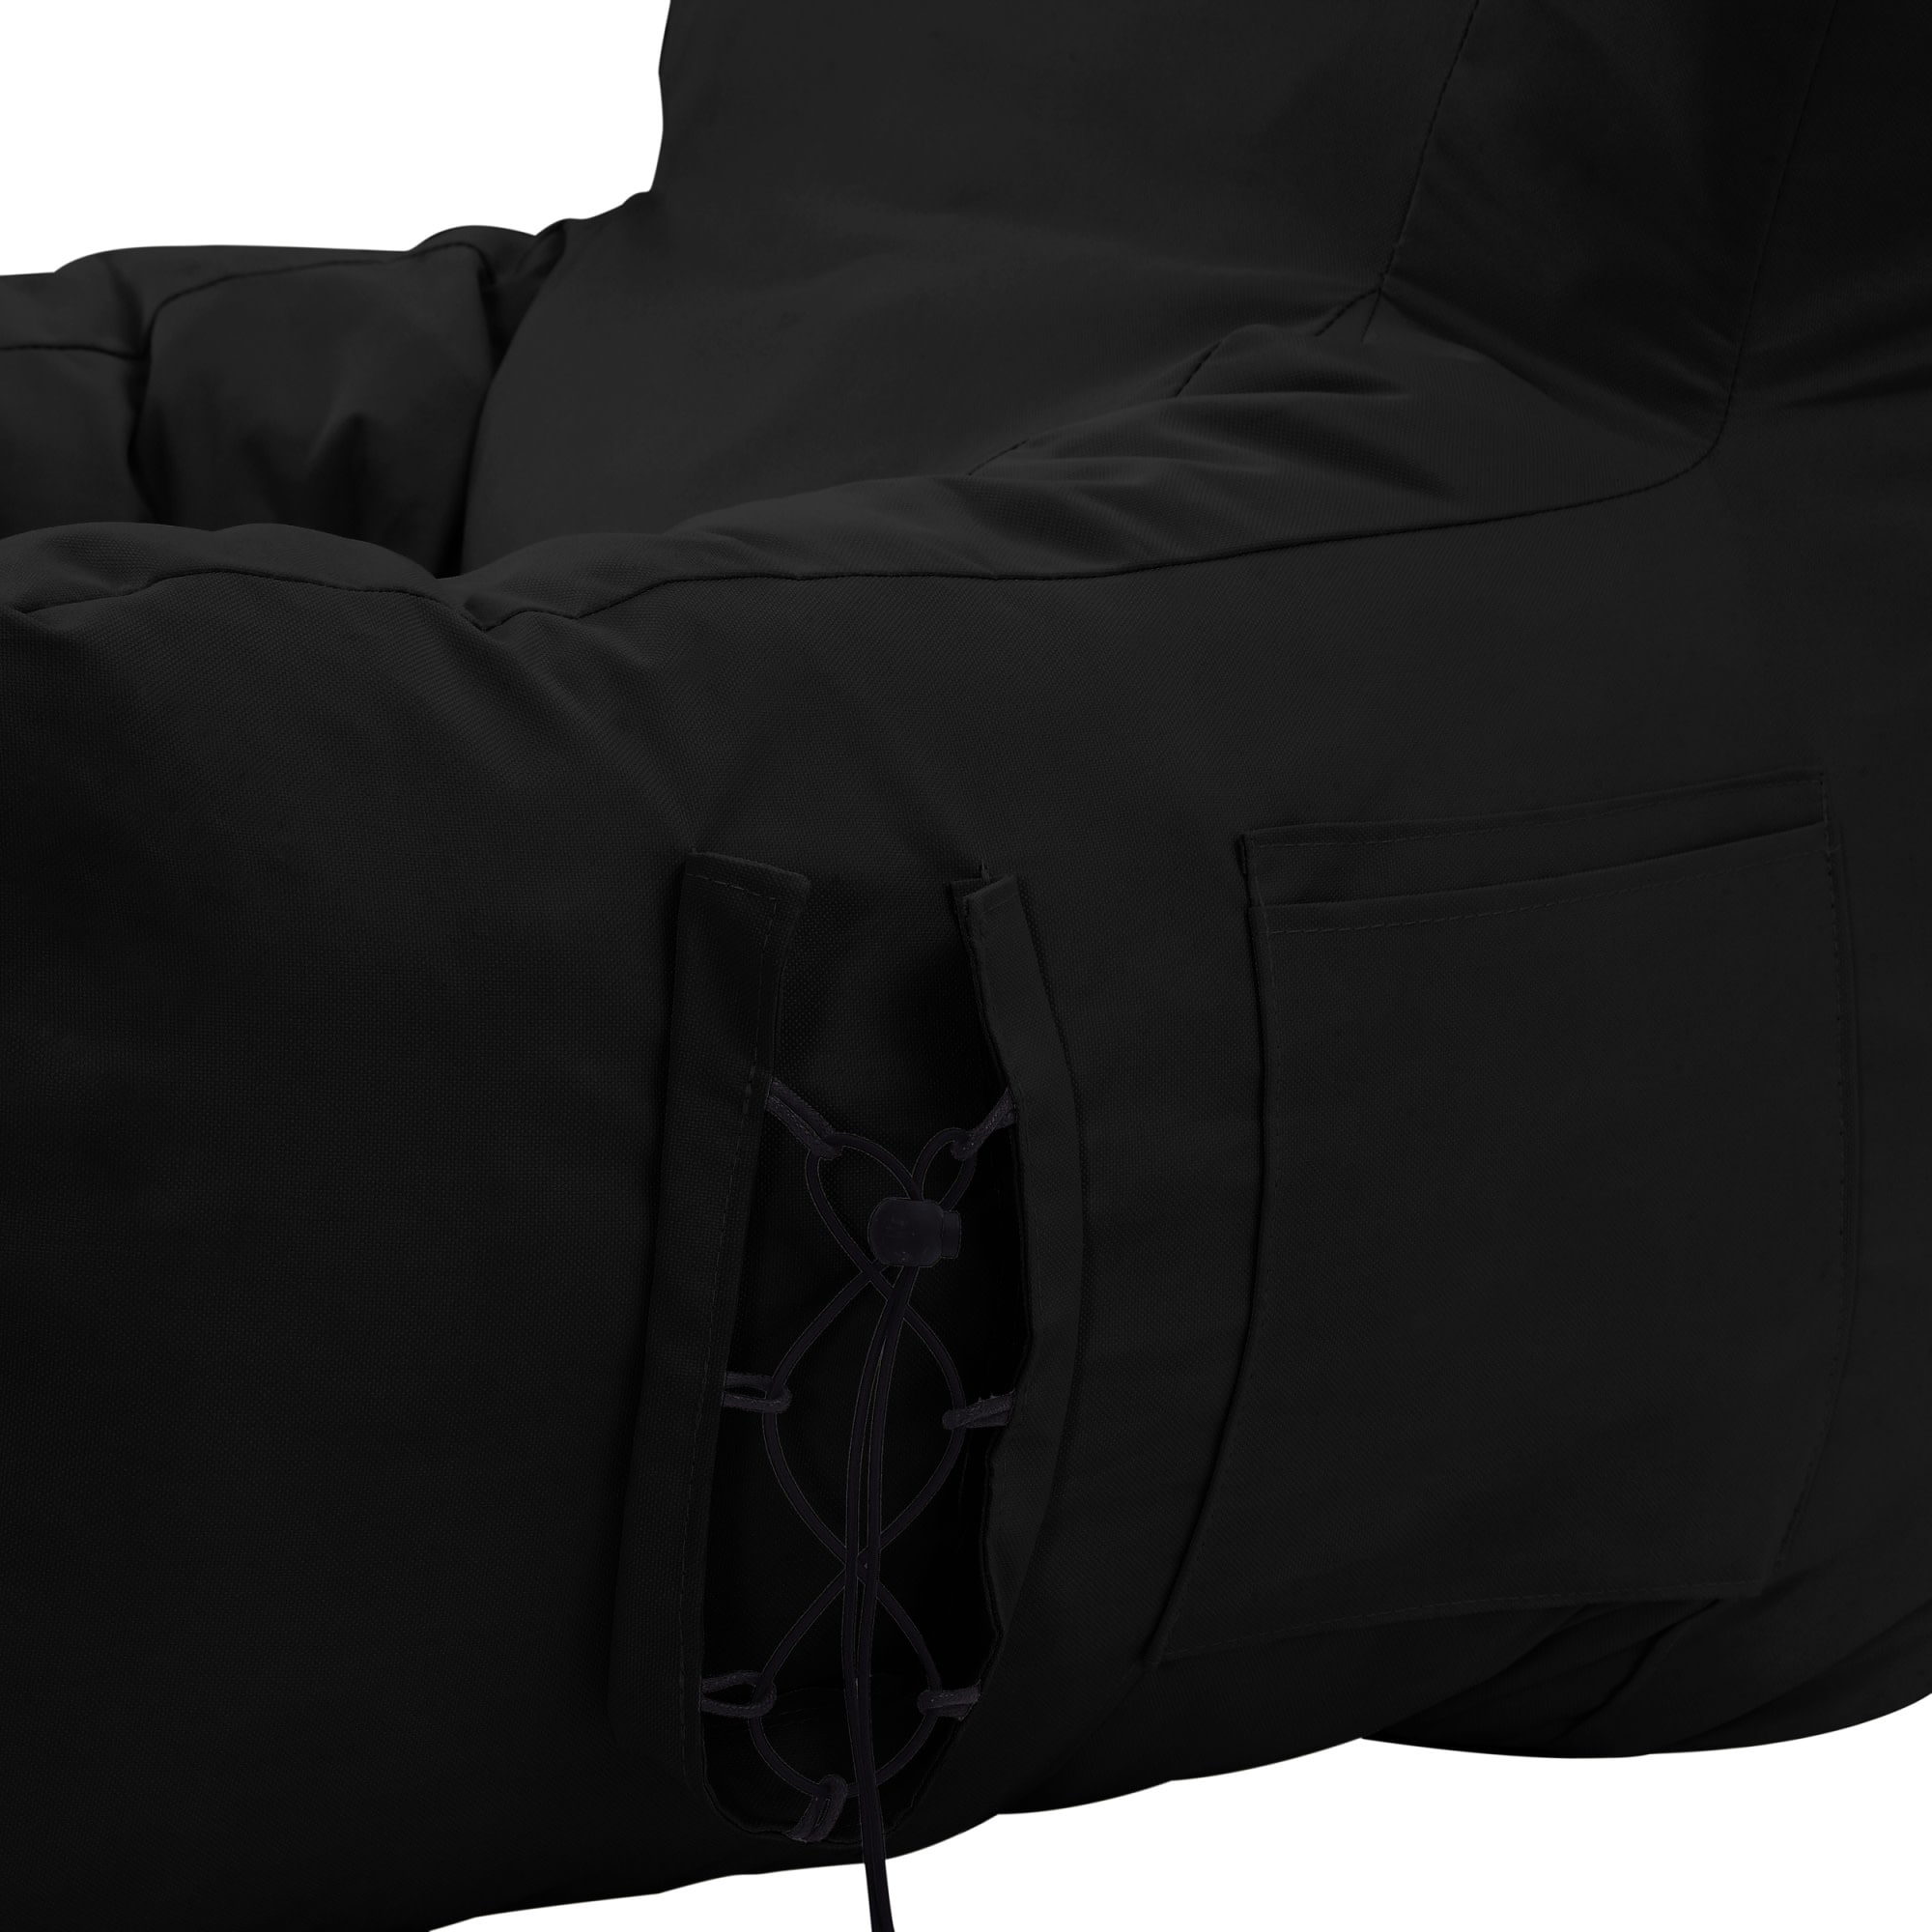 Loungie Nylon Bean Bag Chair Indoor/Outdoor Water Resistant, Black